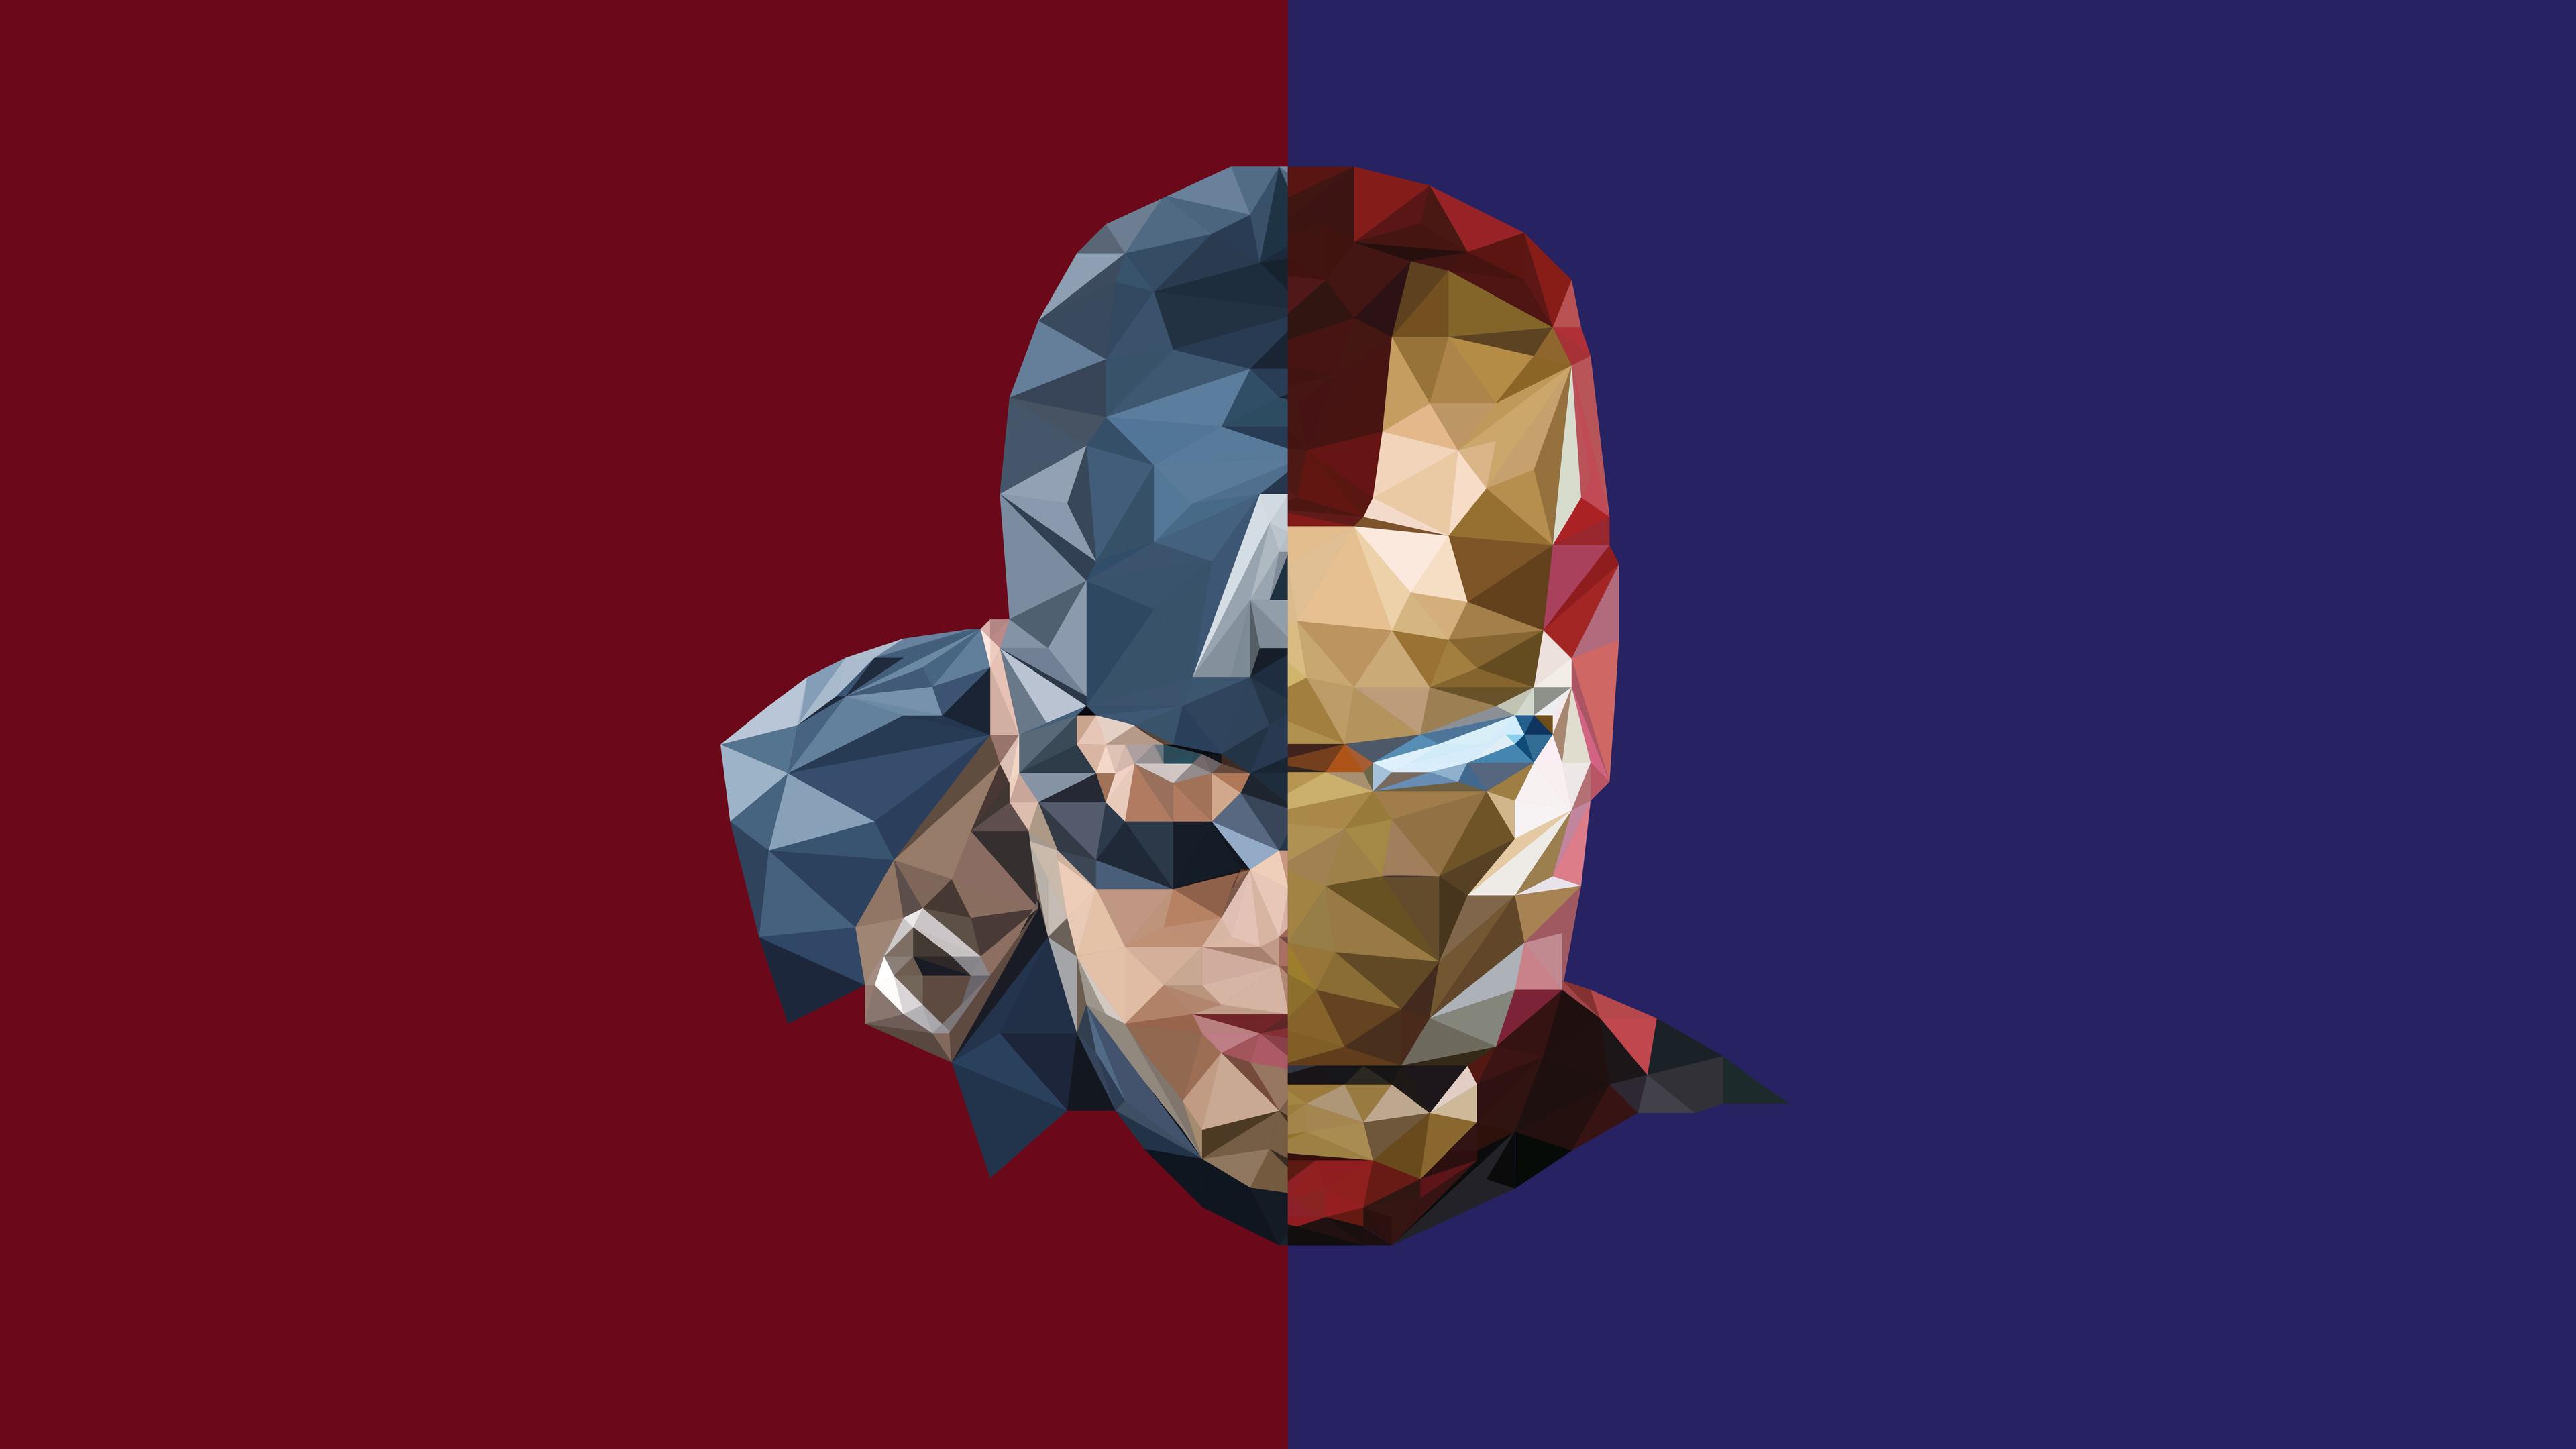 Wallpaper 4k Iron Man Captain America Abstract 4k Wallpaper, 5k